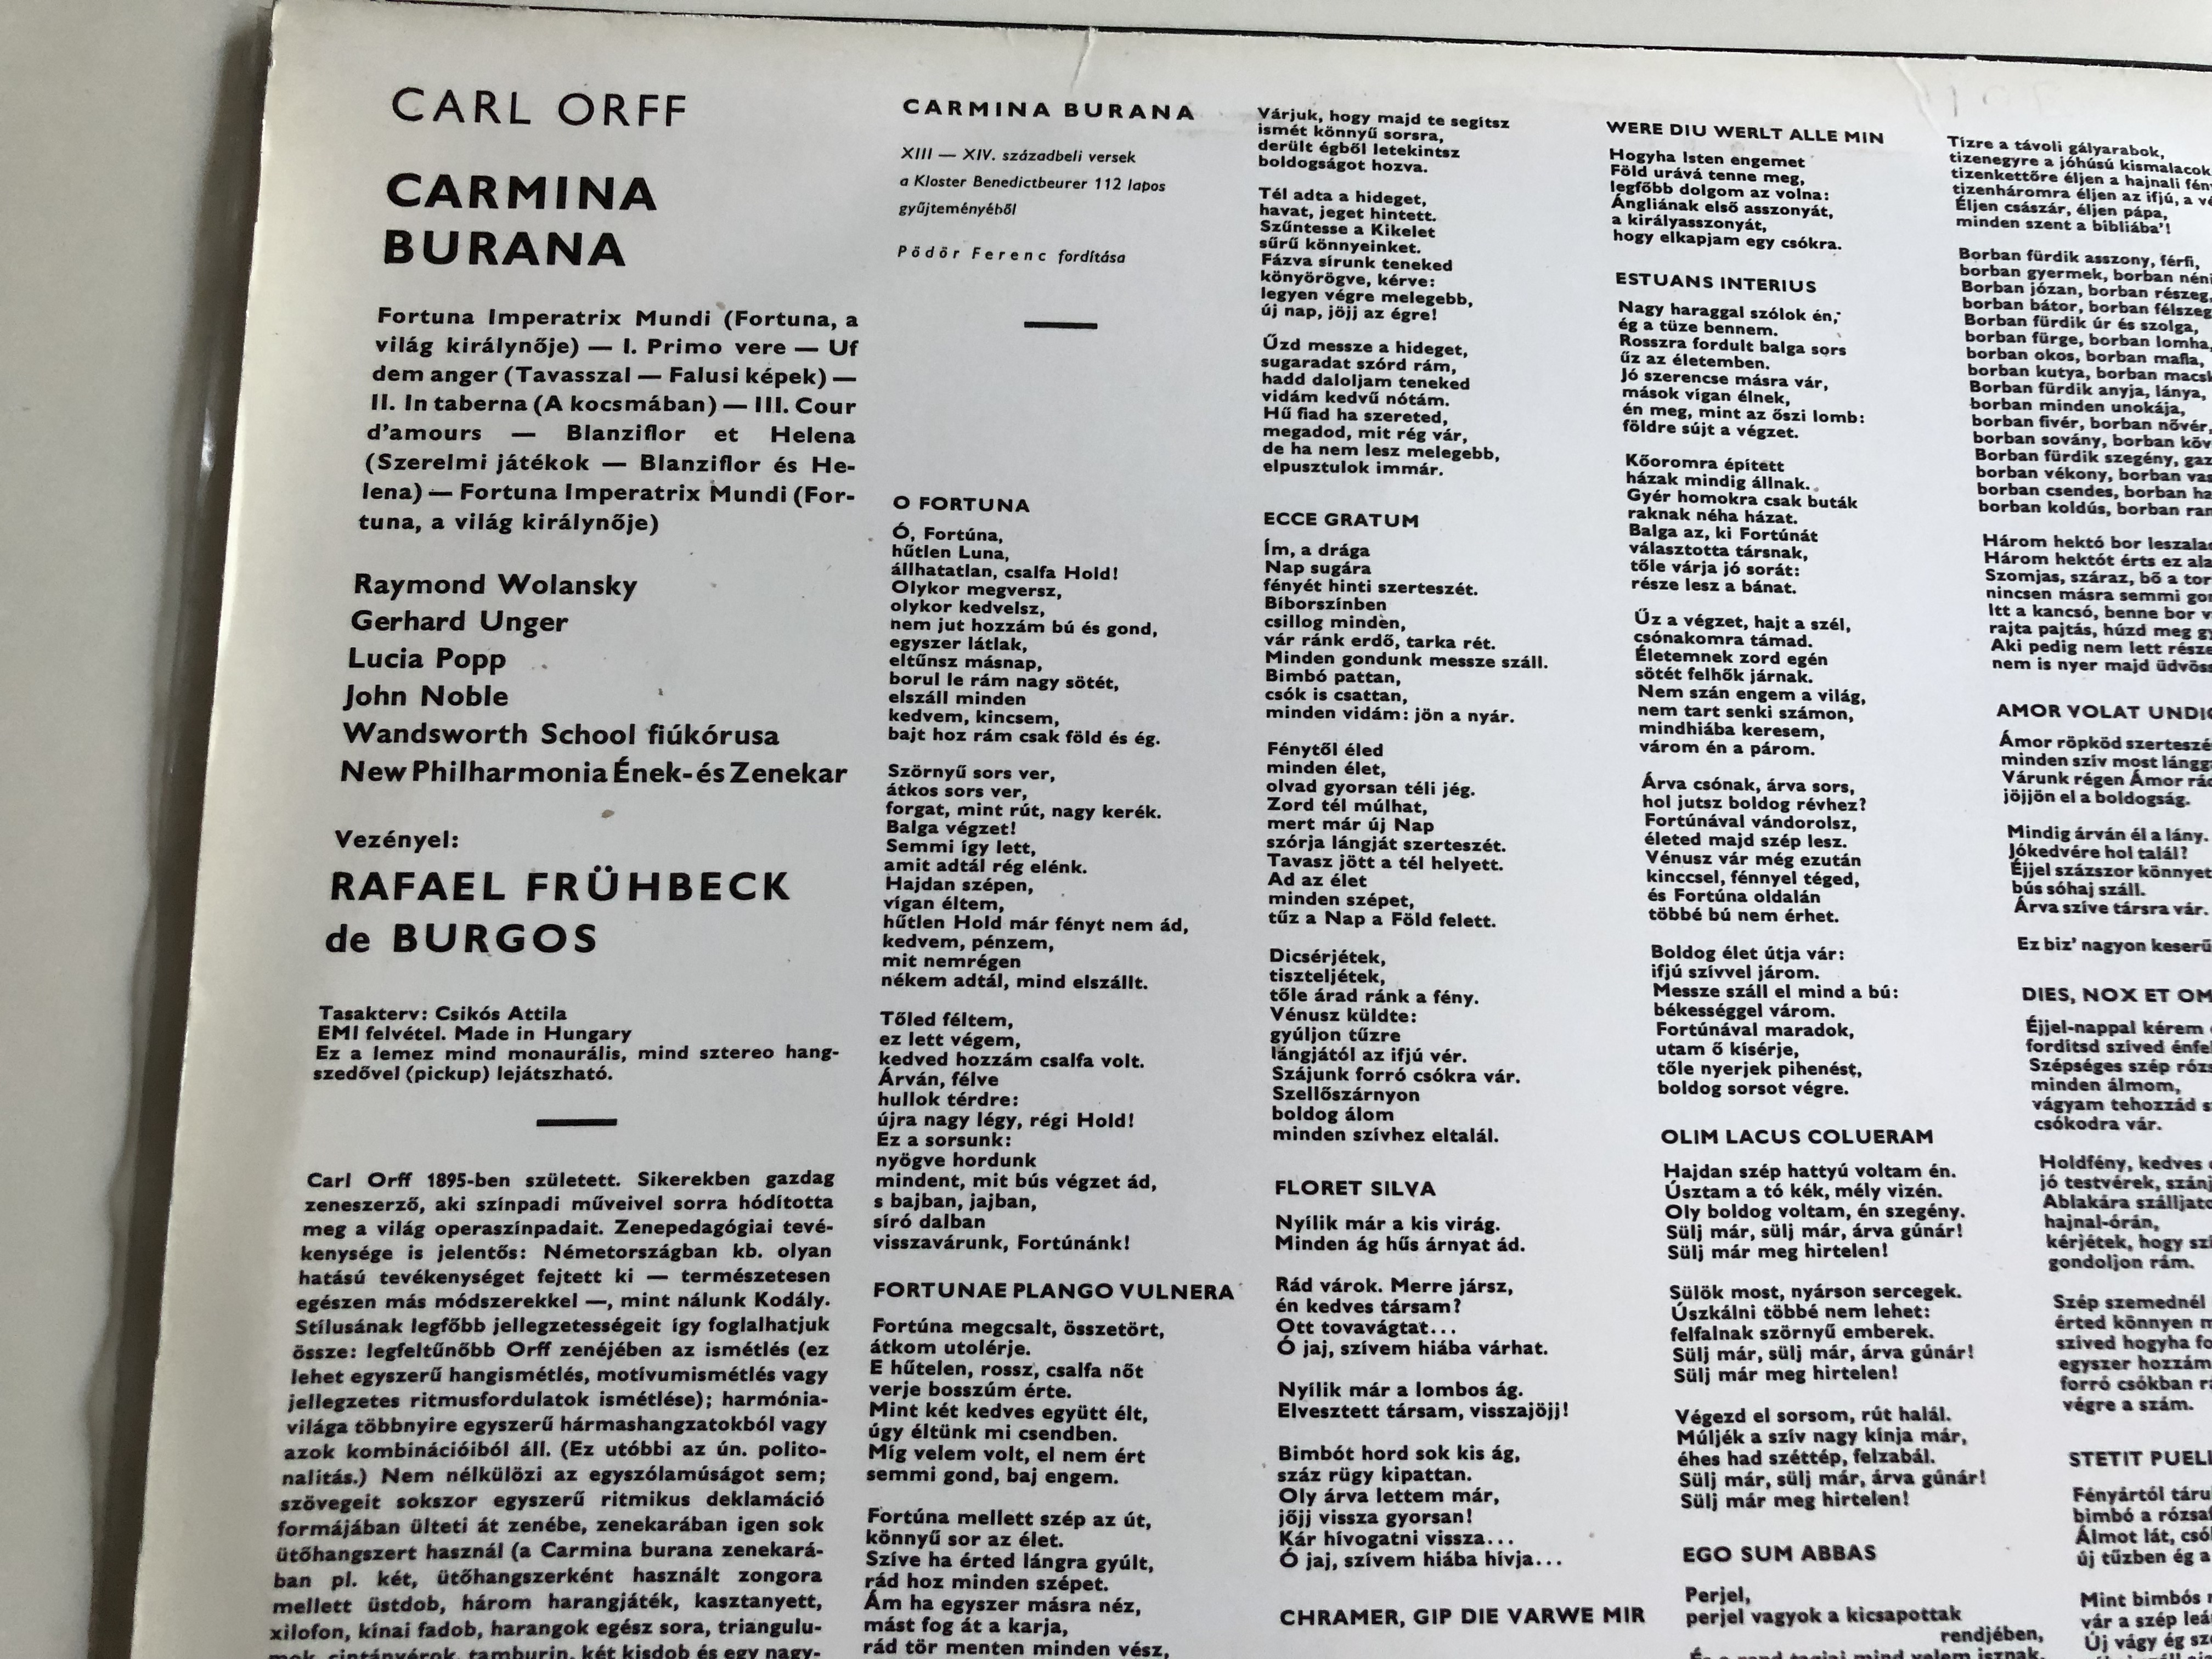 carmina-burana-orff-wolansky-unger-popp-noble-wandsworth-school-fiukorusa-new-philharmonia-hungaroton-lp-stereo-mono-slpx-11649-3-.jpg